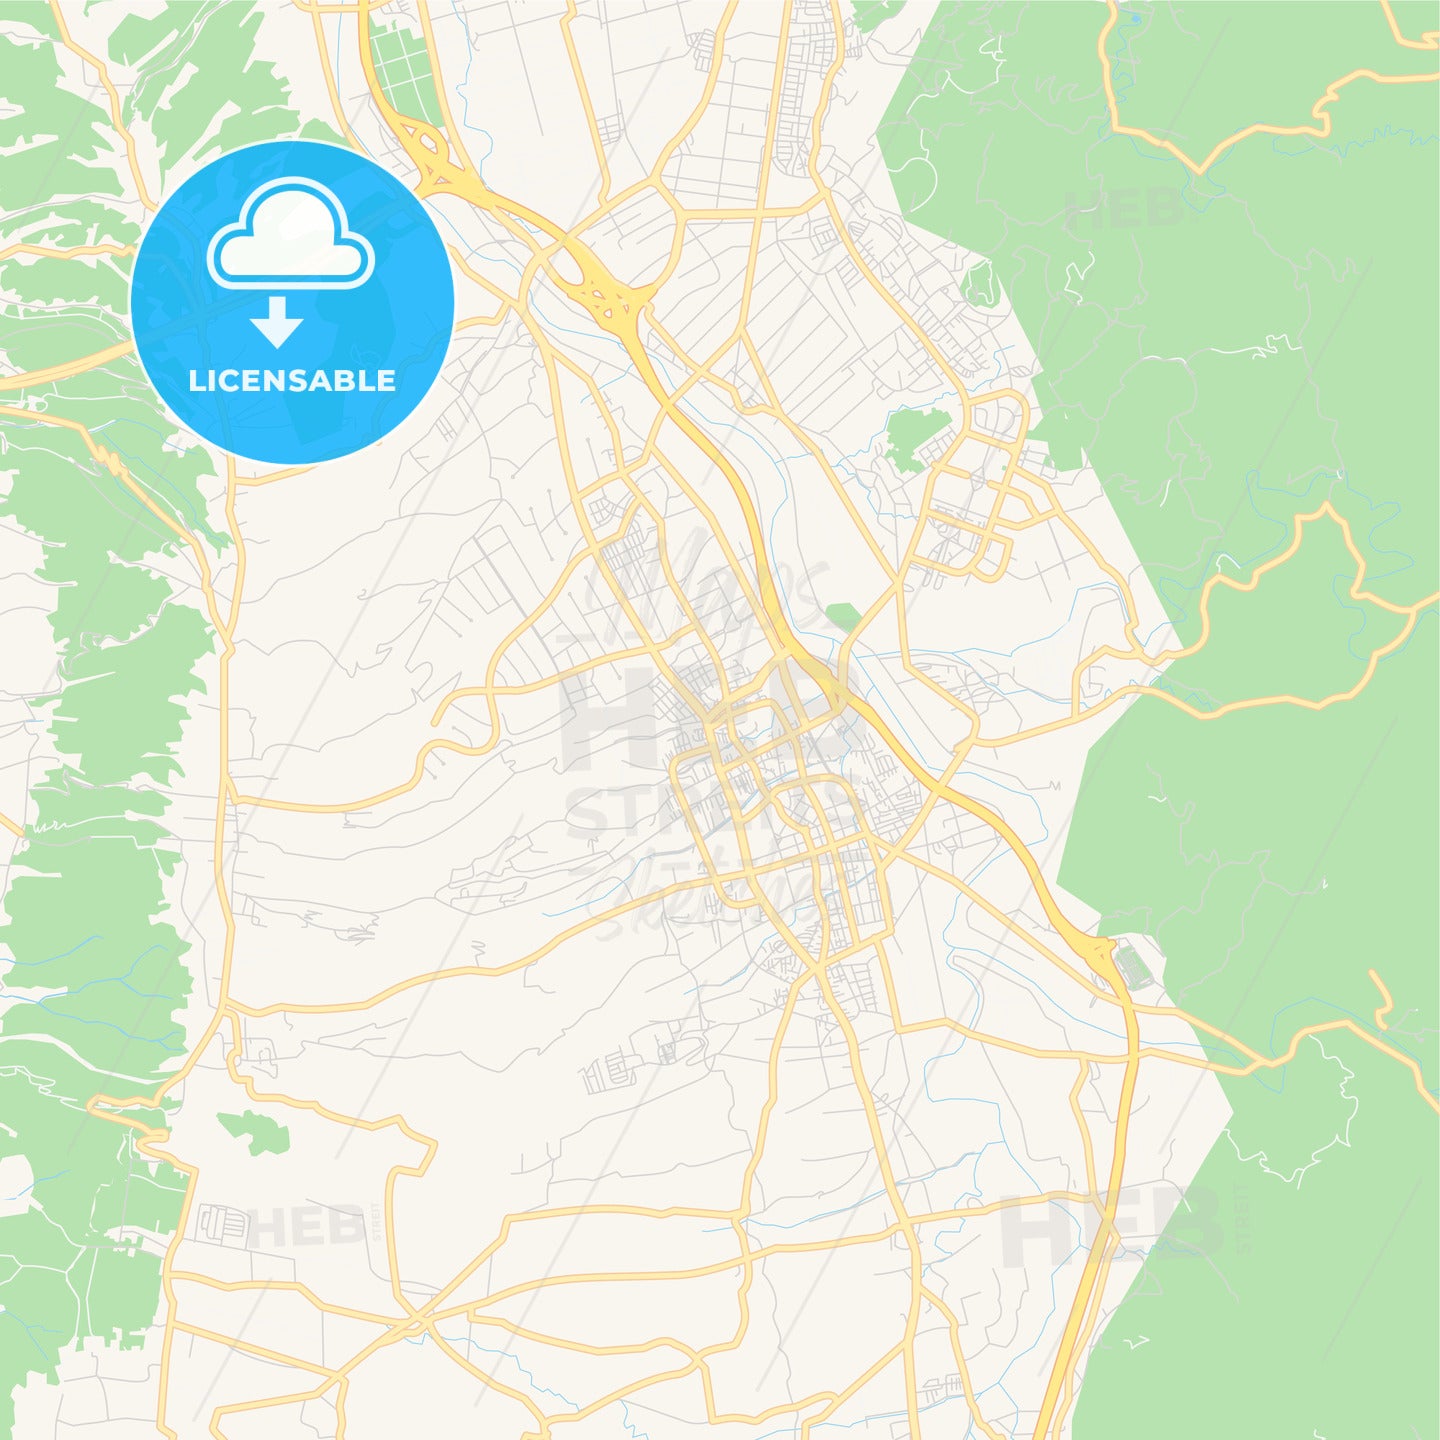 Printable street map of Nantou, Taiwan